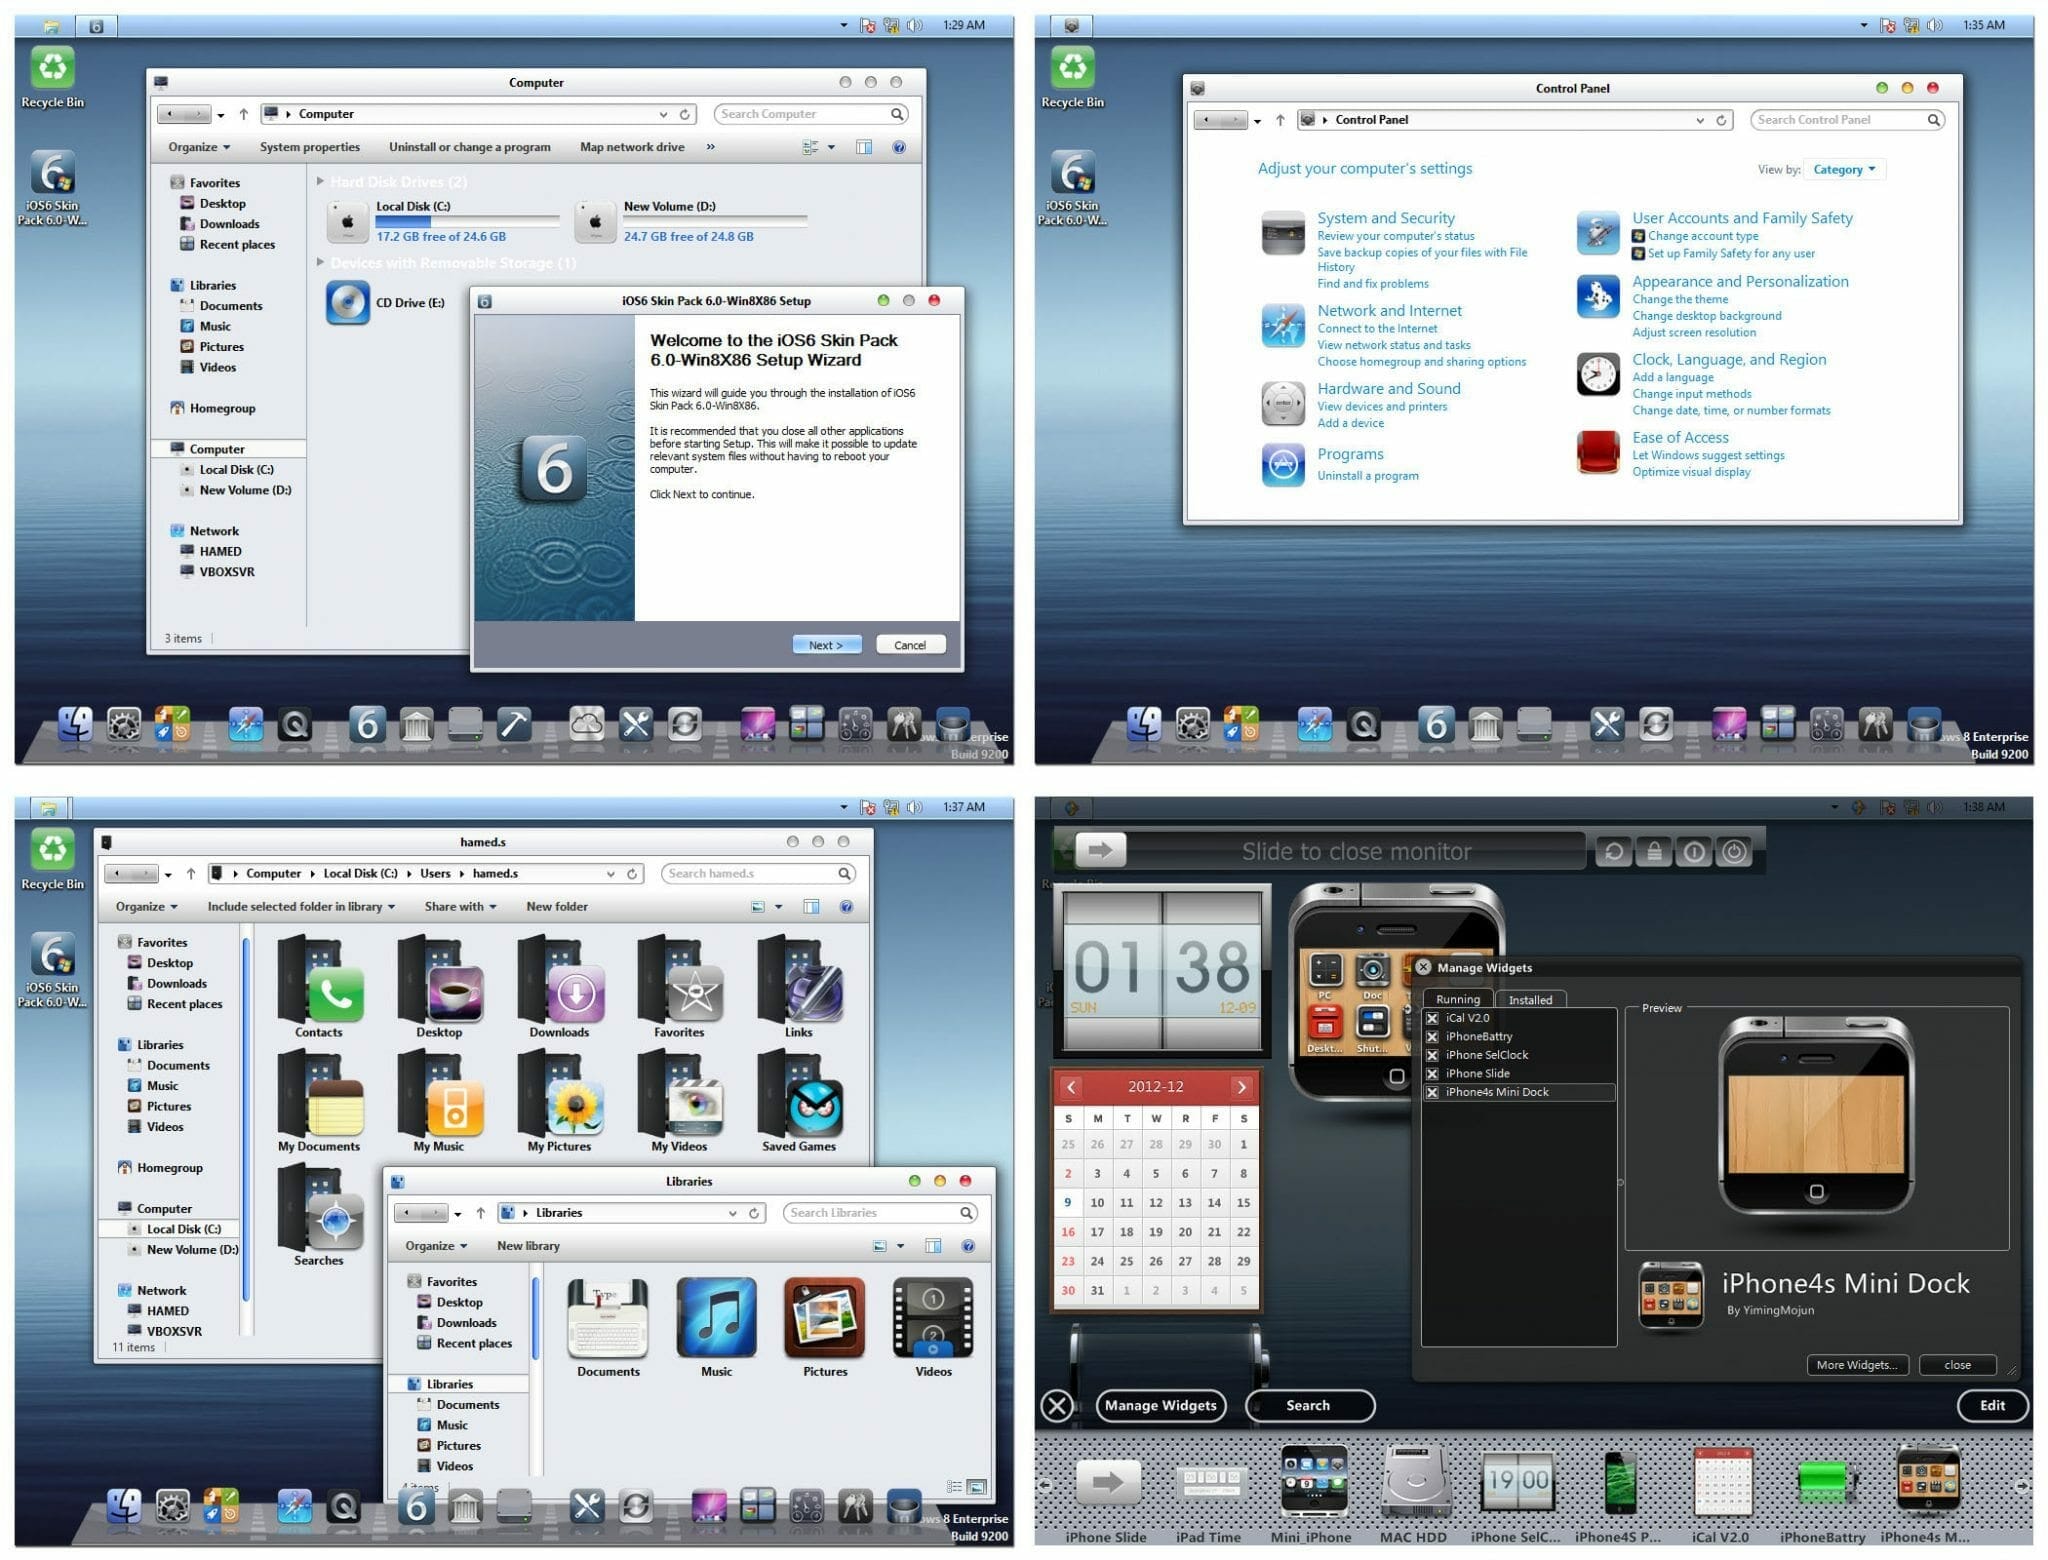 iOS 6 theme for windows